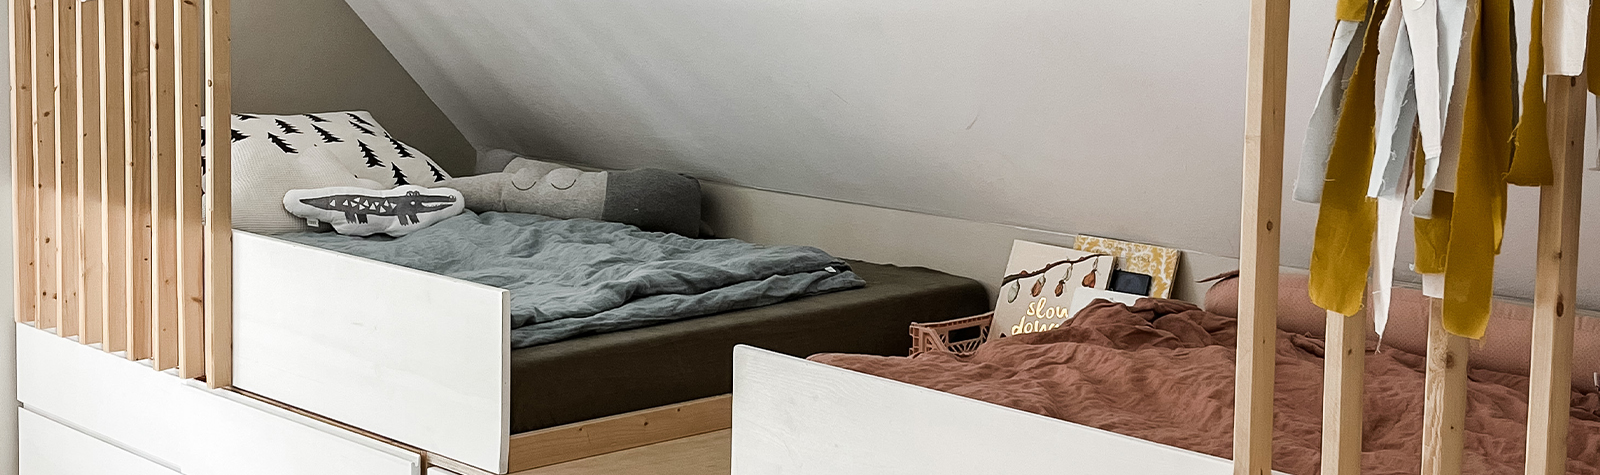 Ikea Hack: Kinderbett selber bauen